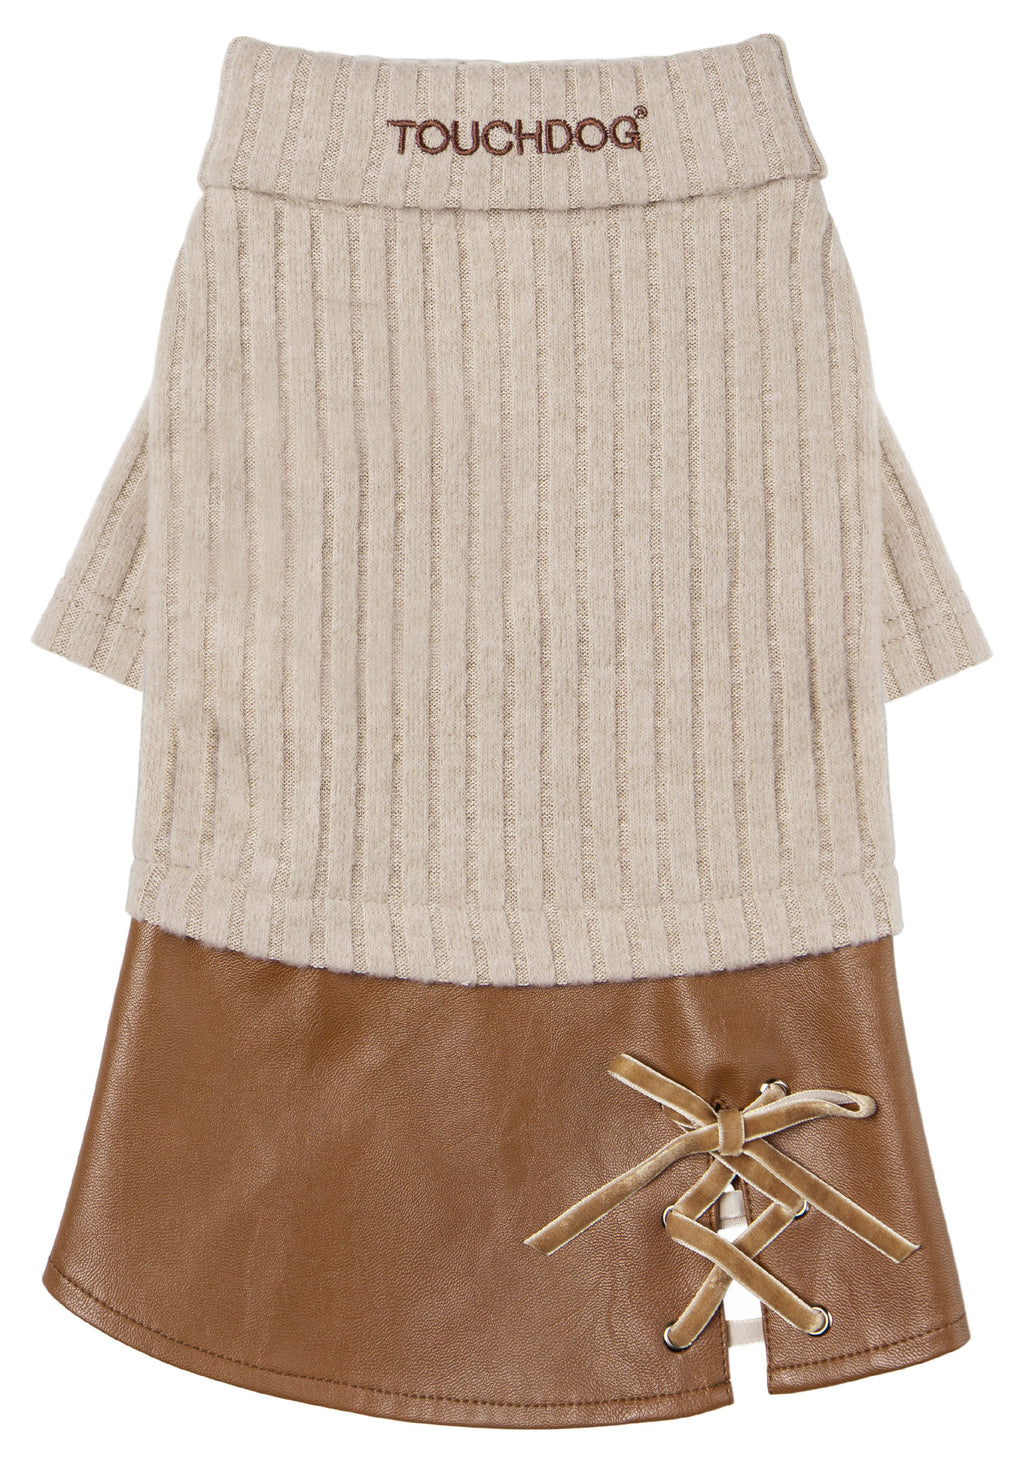 Touchdog ® 'Modress' Fashion Designer Dog Sweater and Dress Brown Small